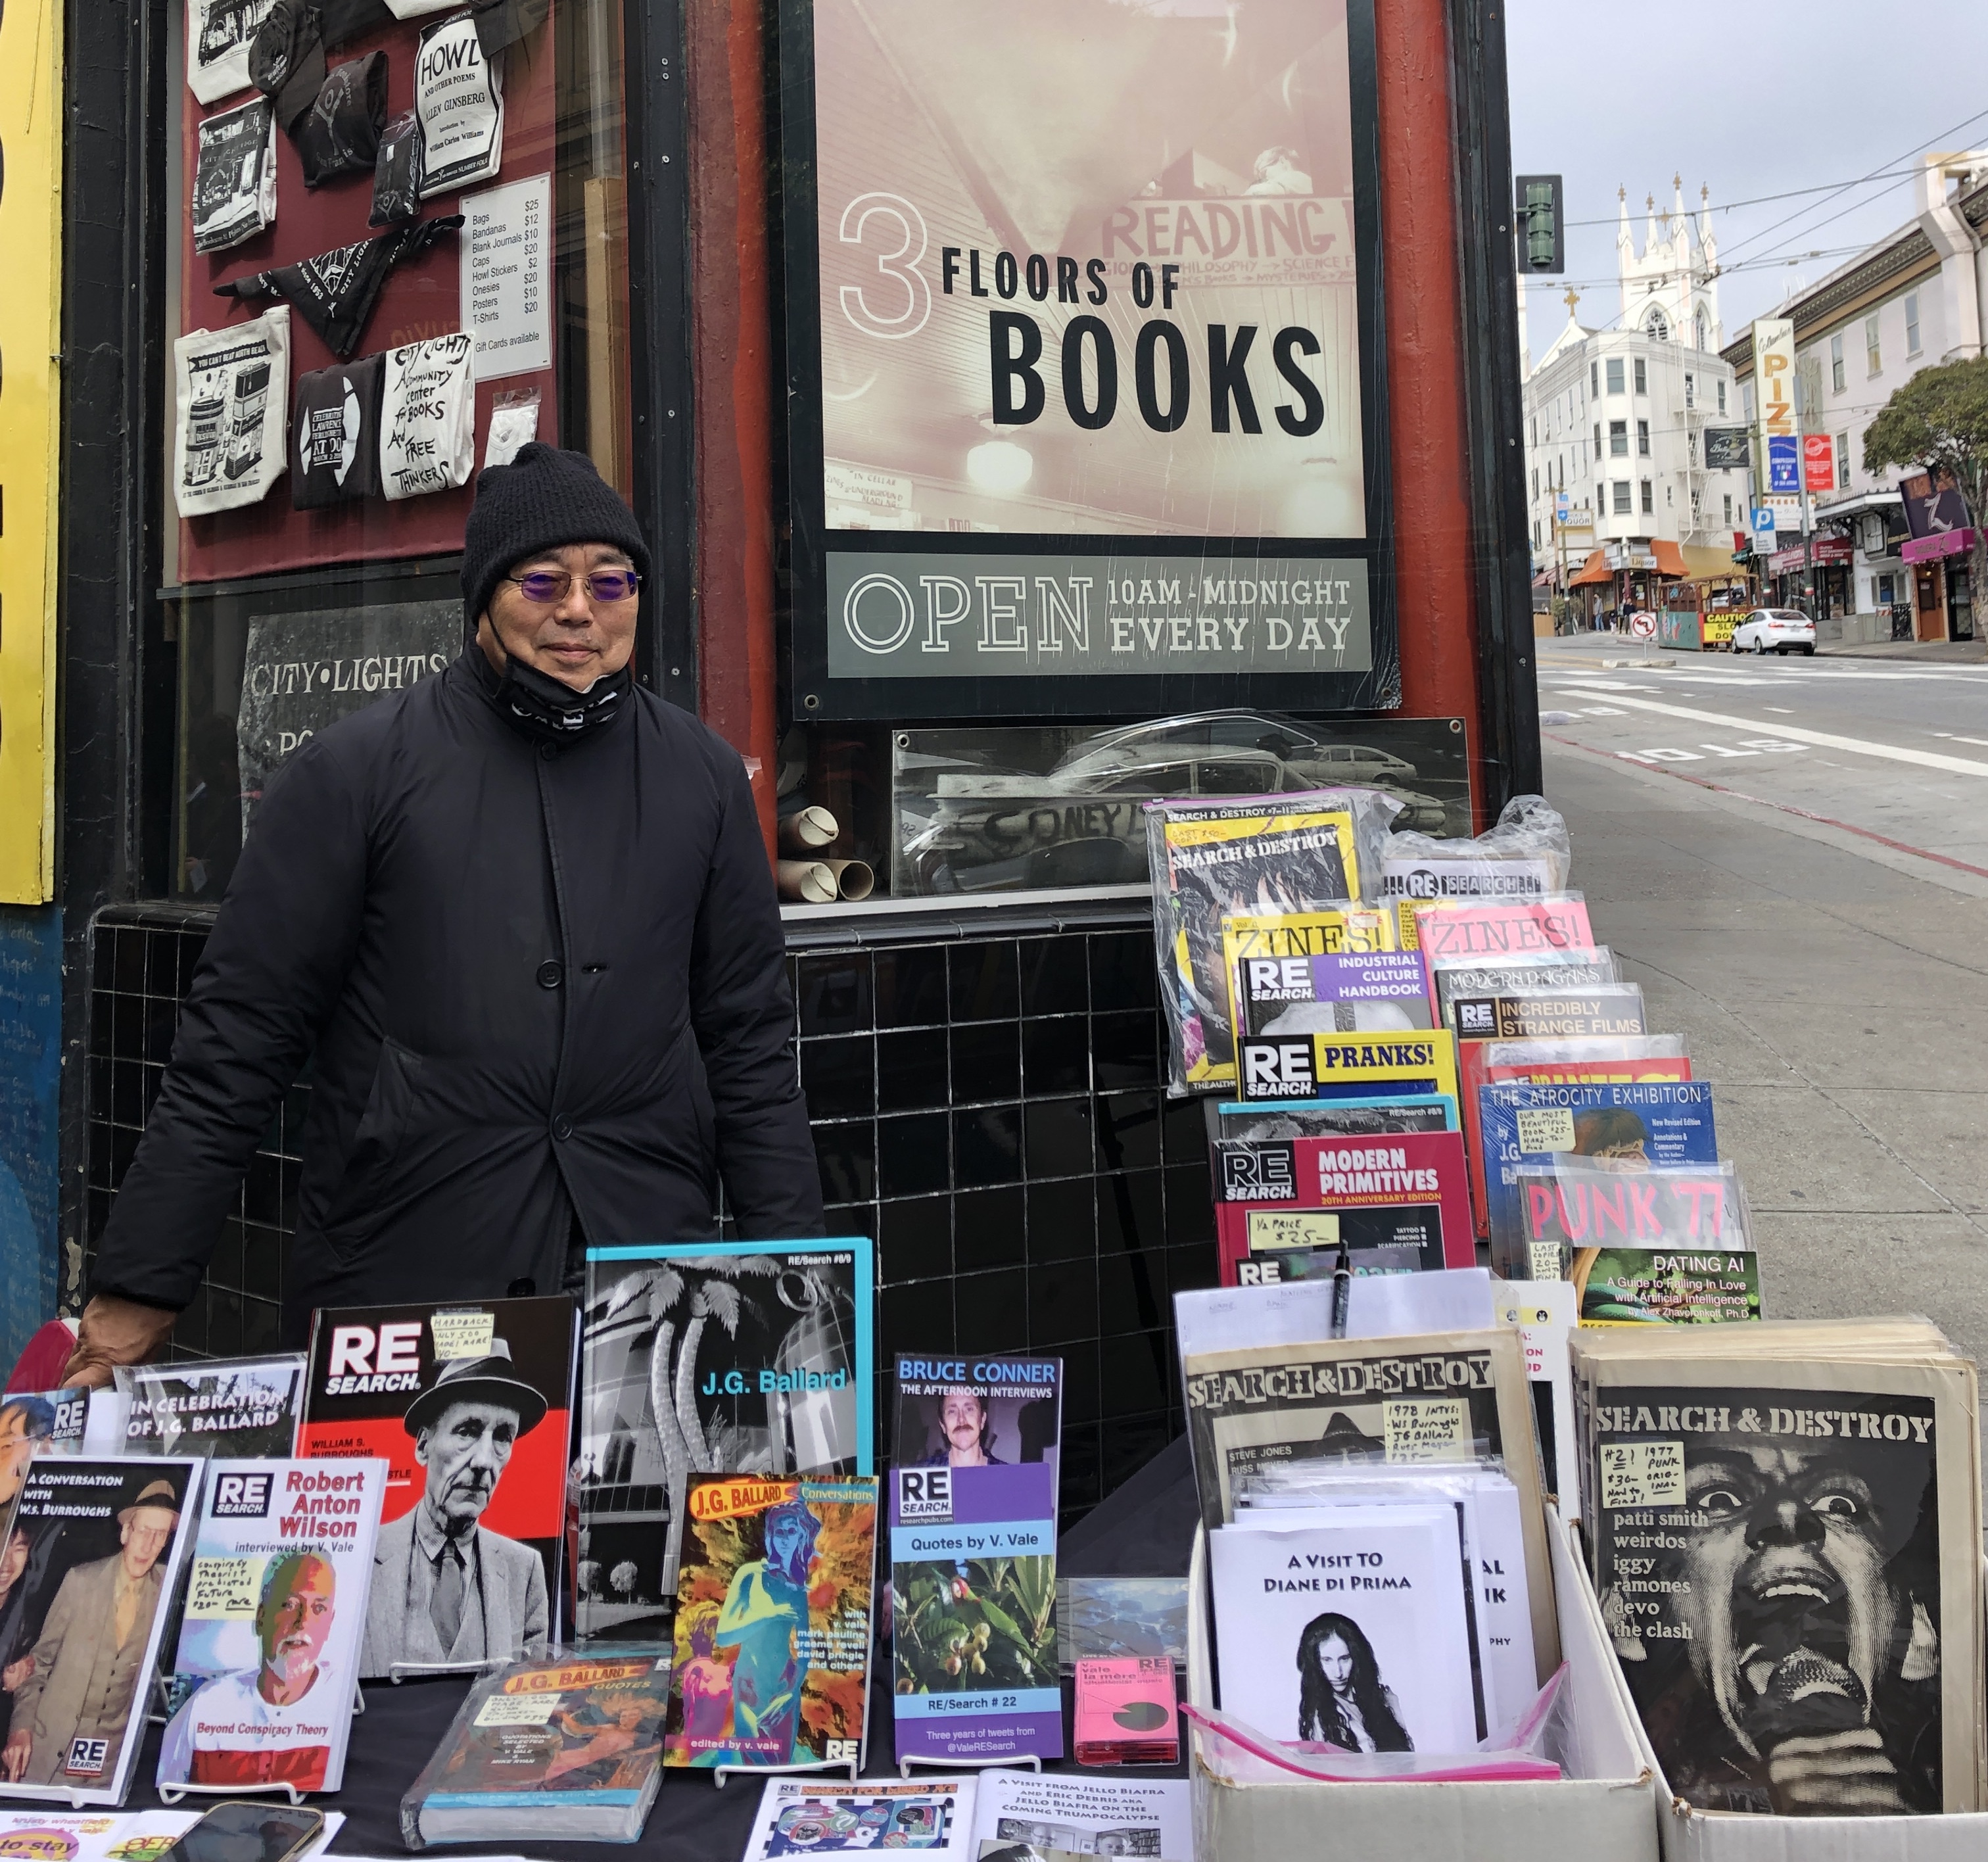 Der Verleger V. Vale vor dem Buchladen City Lights in North Beach, San Francisco.